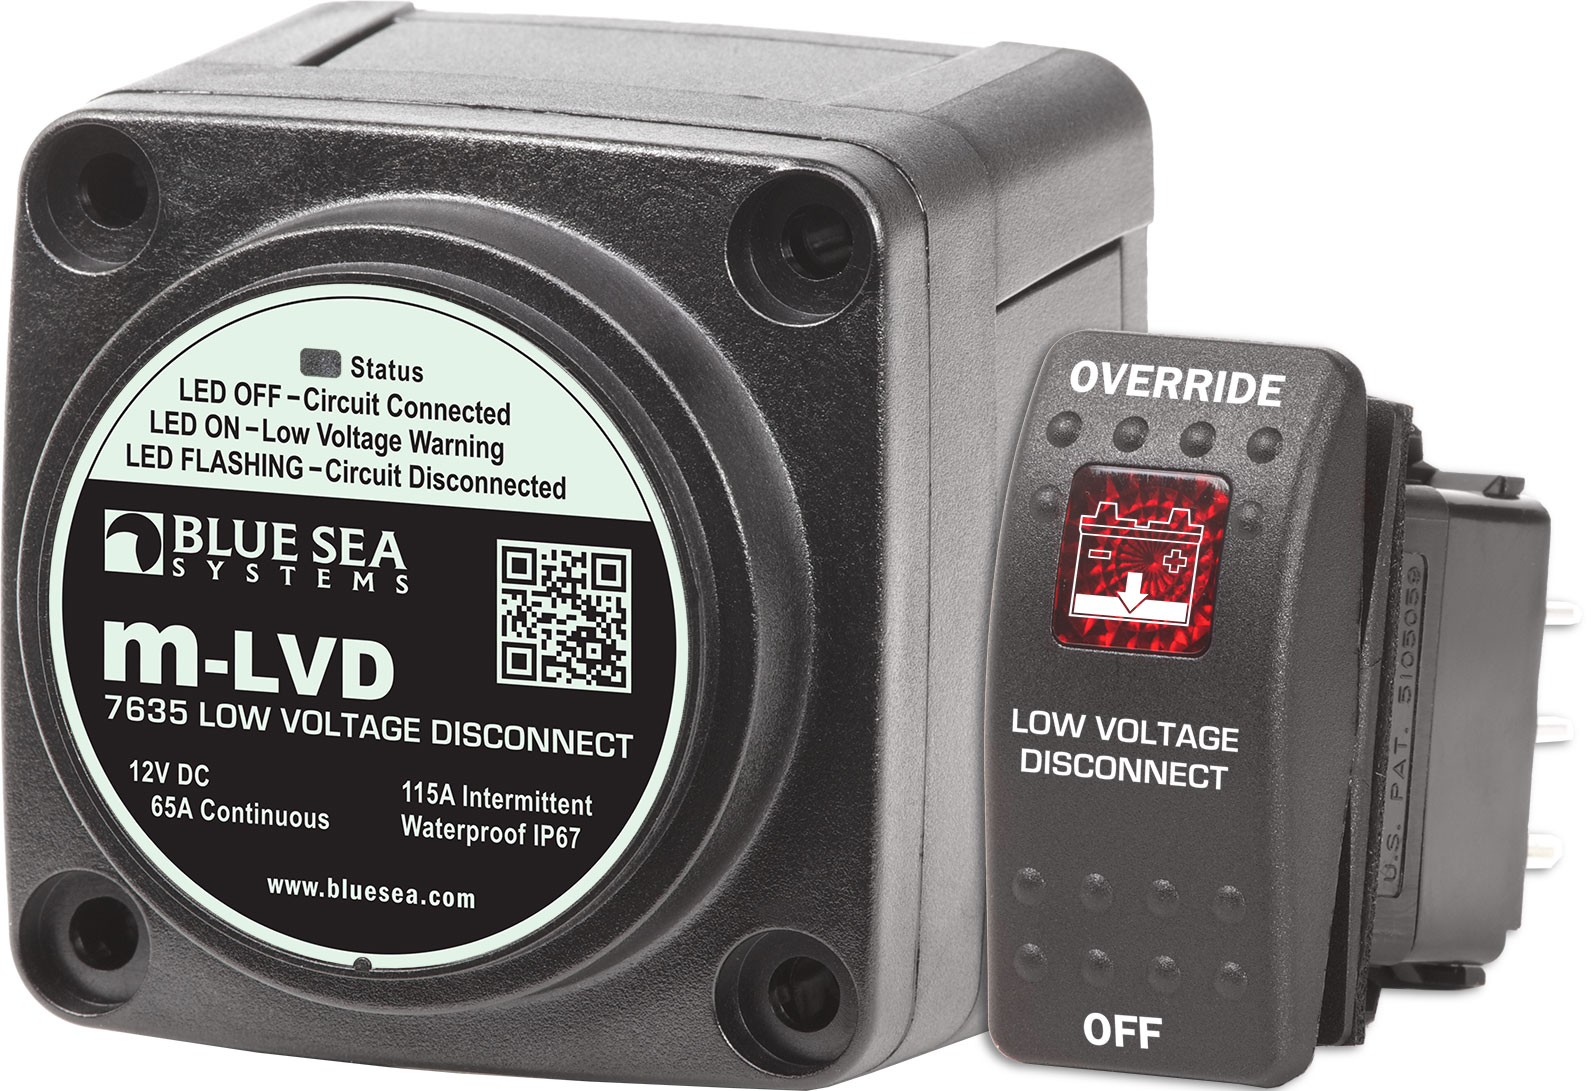 Blue Sea 7635 Automatischer Trennschalter/Tiefentladeschutz M-LVD